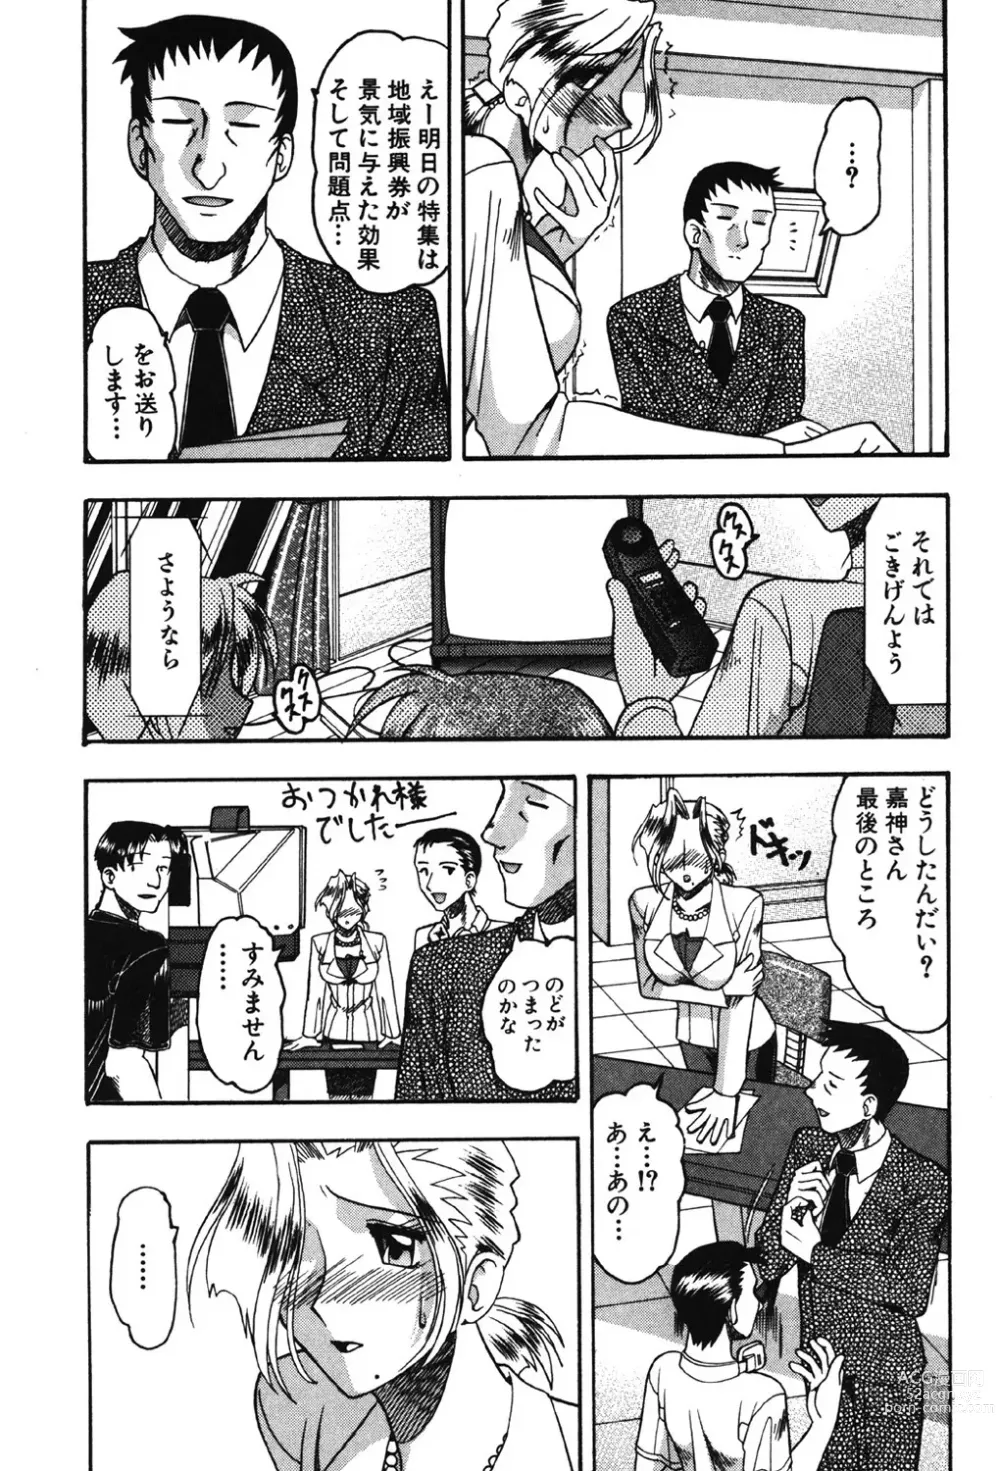 Page 22 of manga Hahaoya Ga Onna Ni Naru Toki